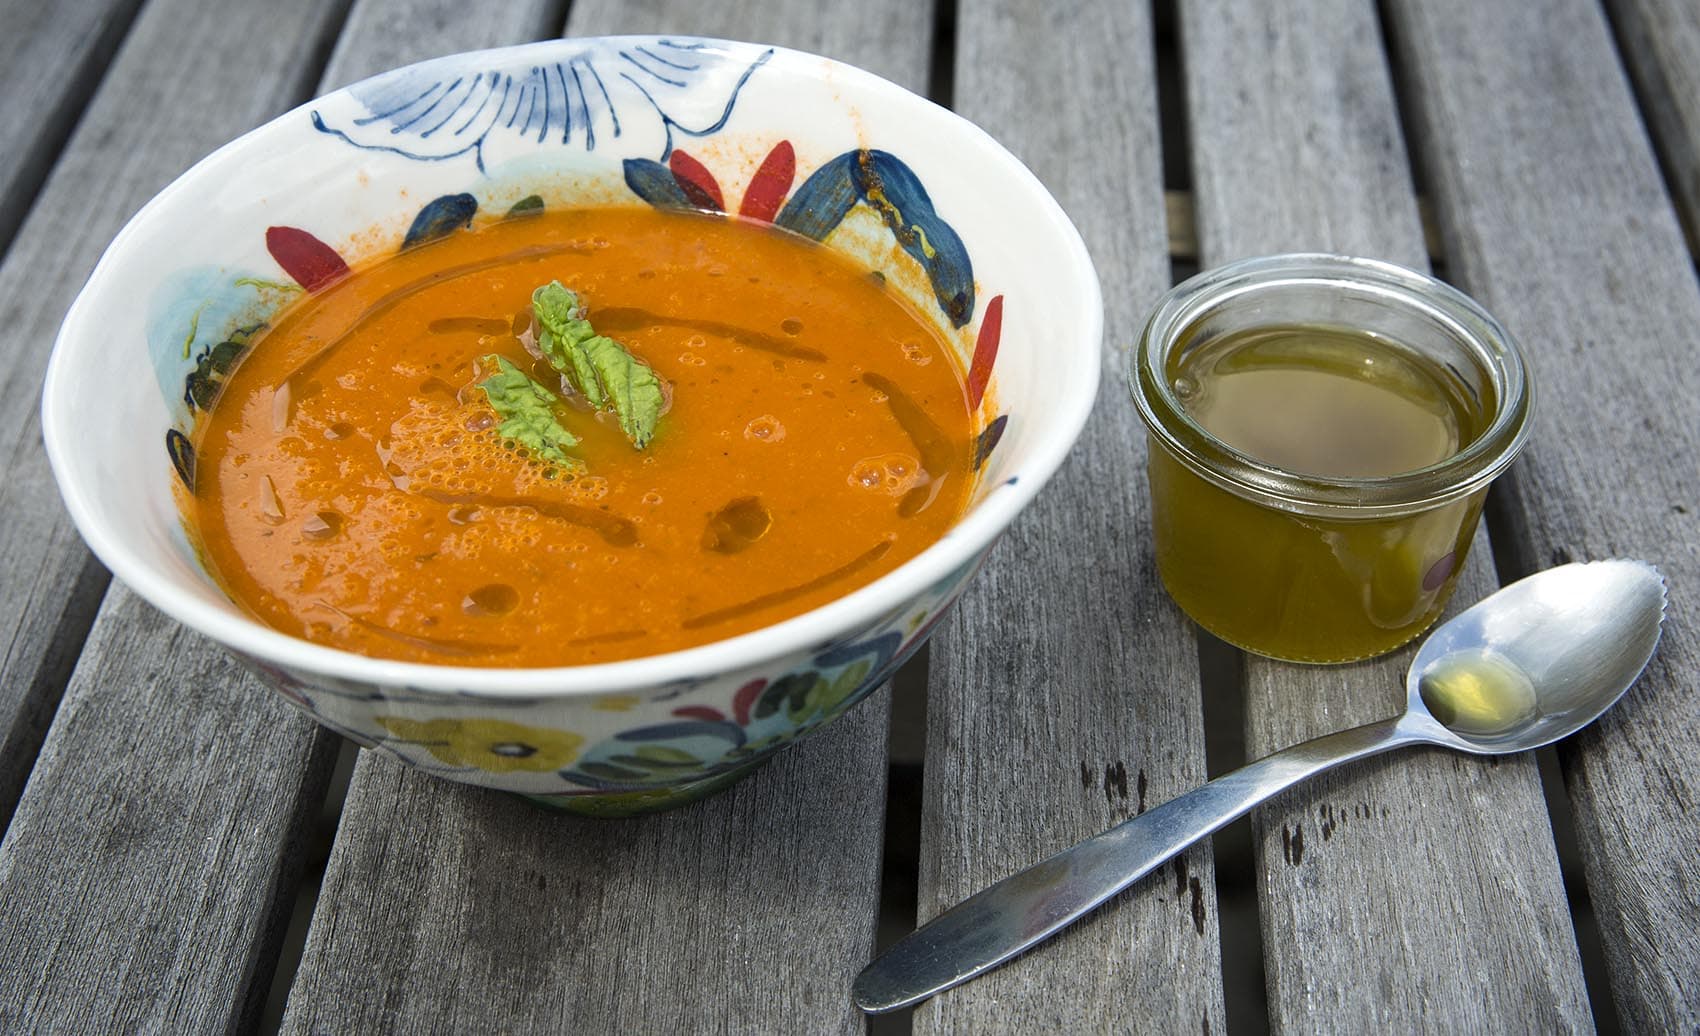 Kathy's summer tomato and basil soup. (Robin Lubbock/WBUR)